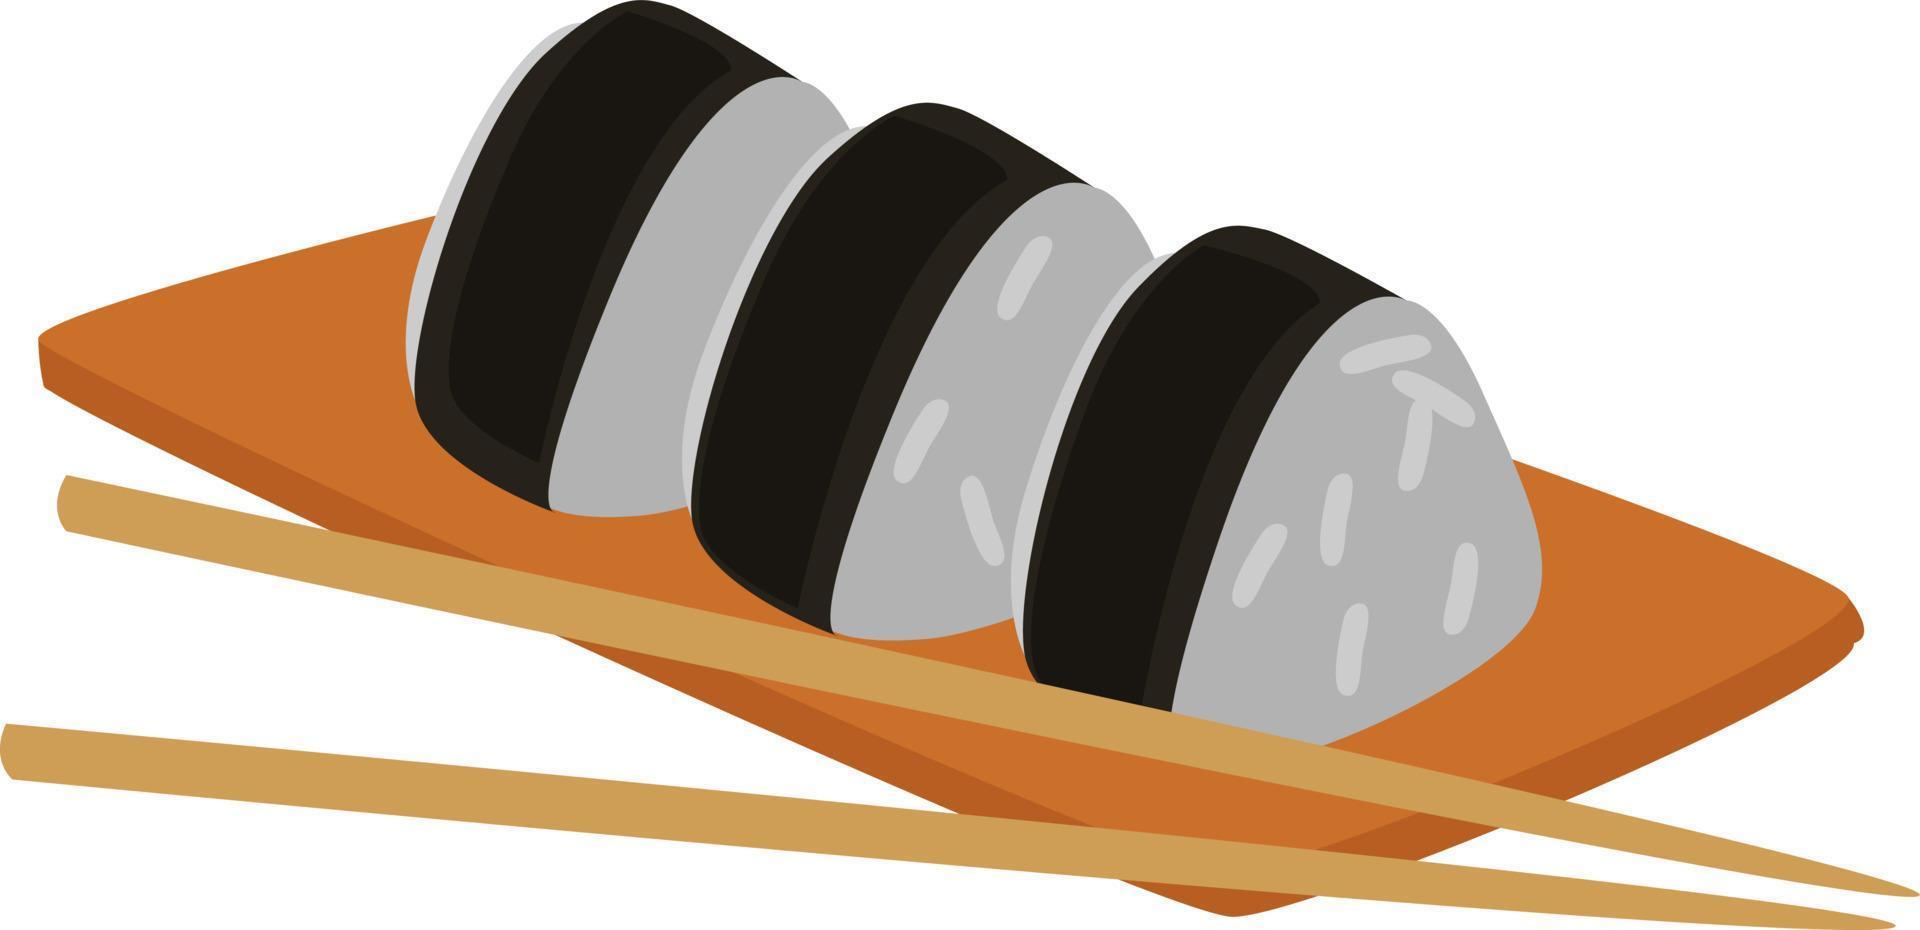 Onigiri food, illustration, vector on white background